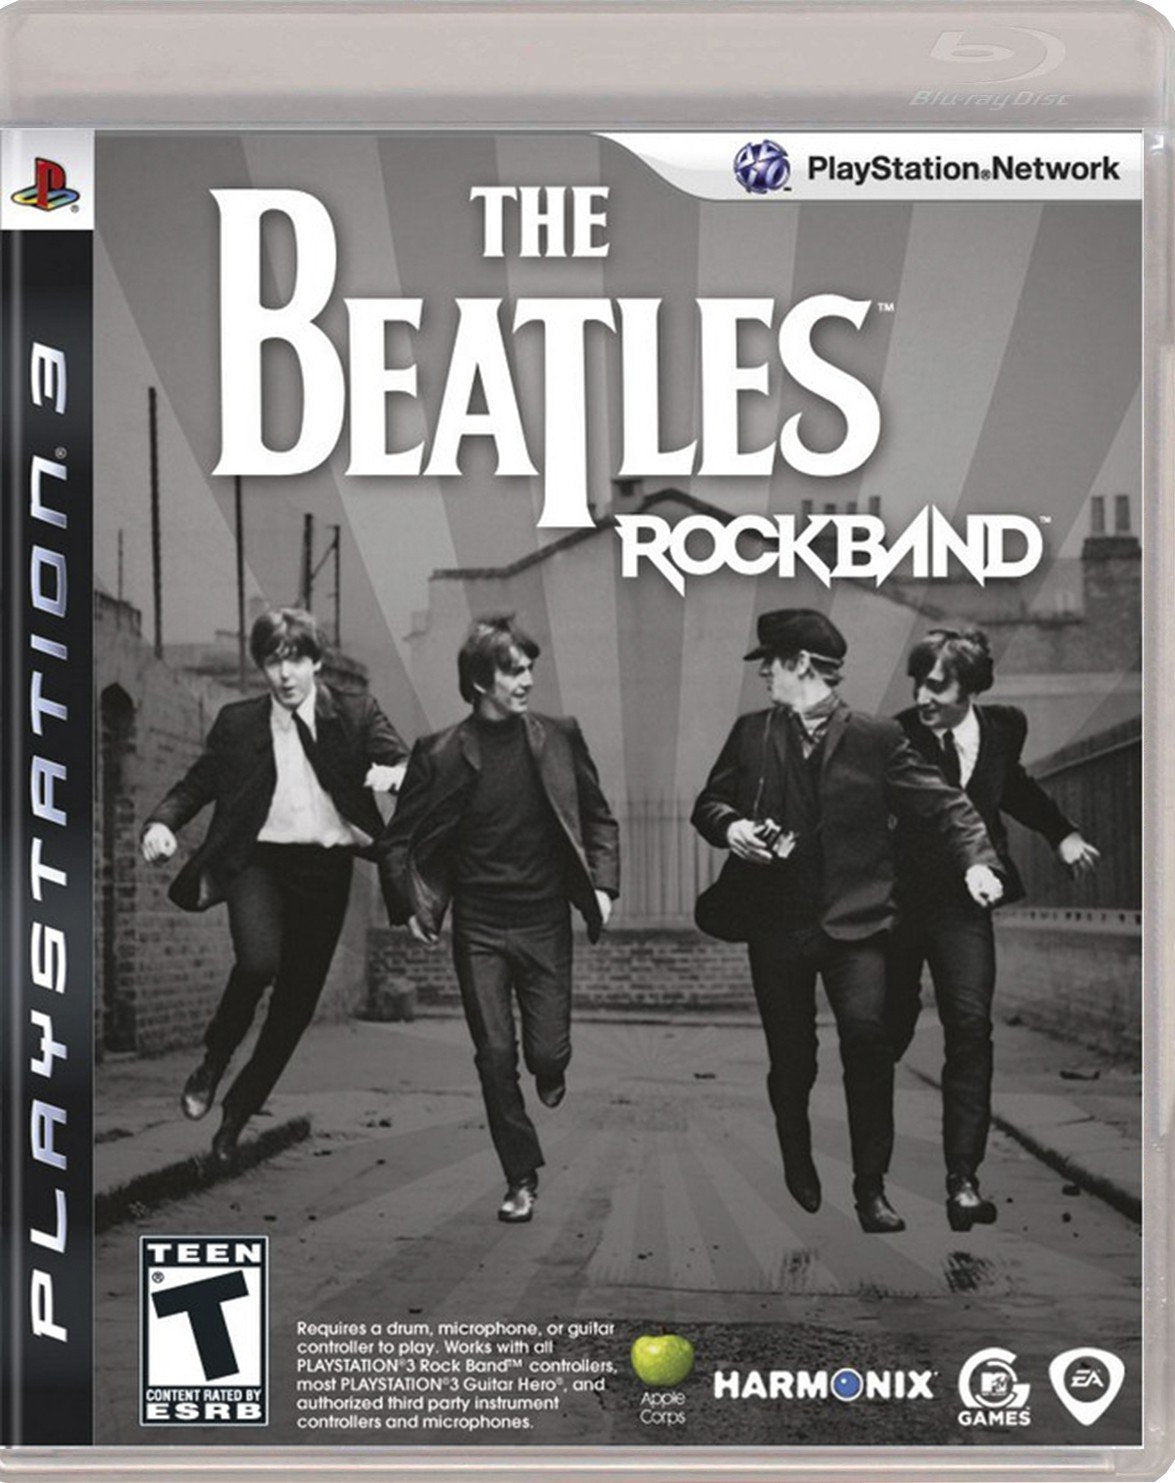 PS3 THE BEATLES ROCKBAND - USADO